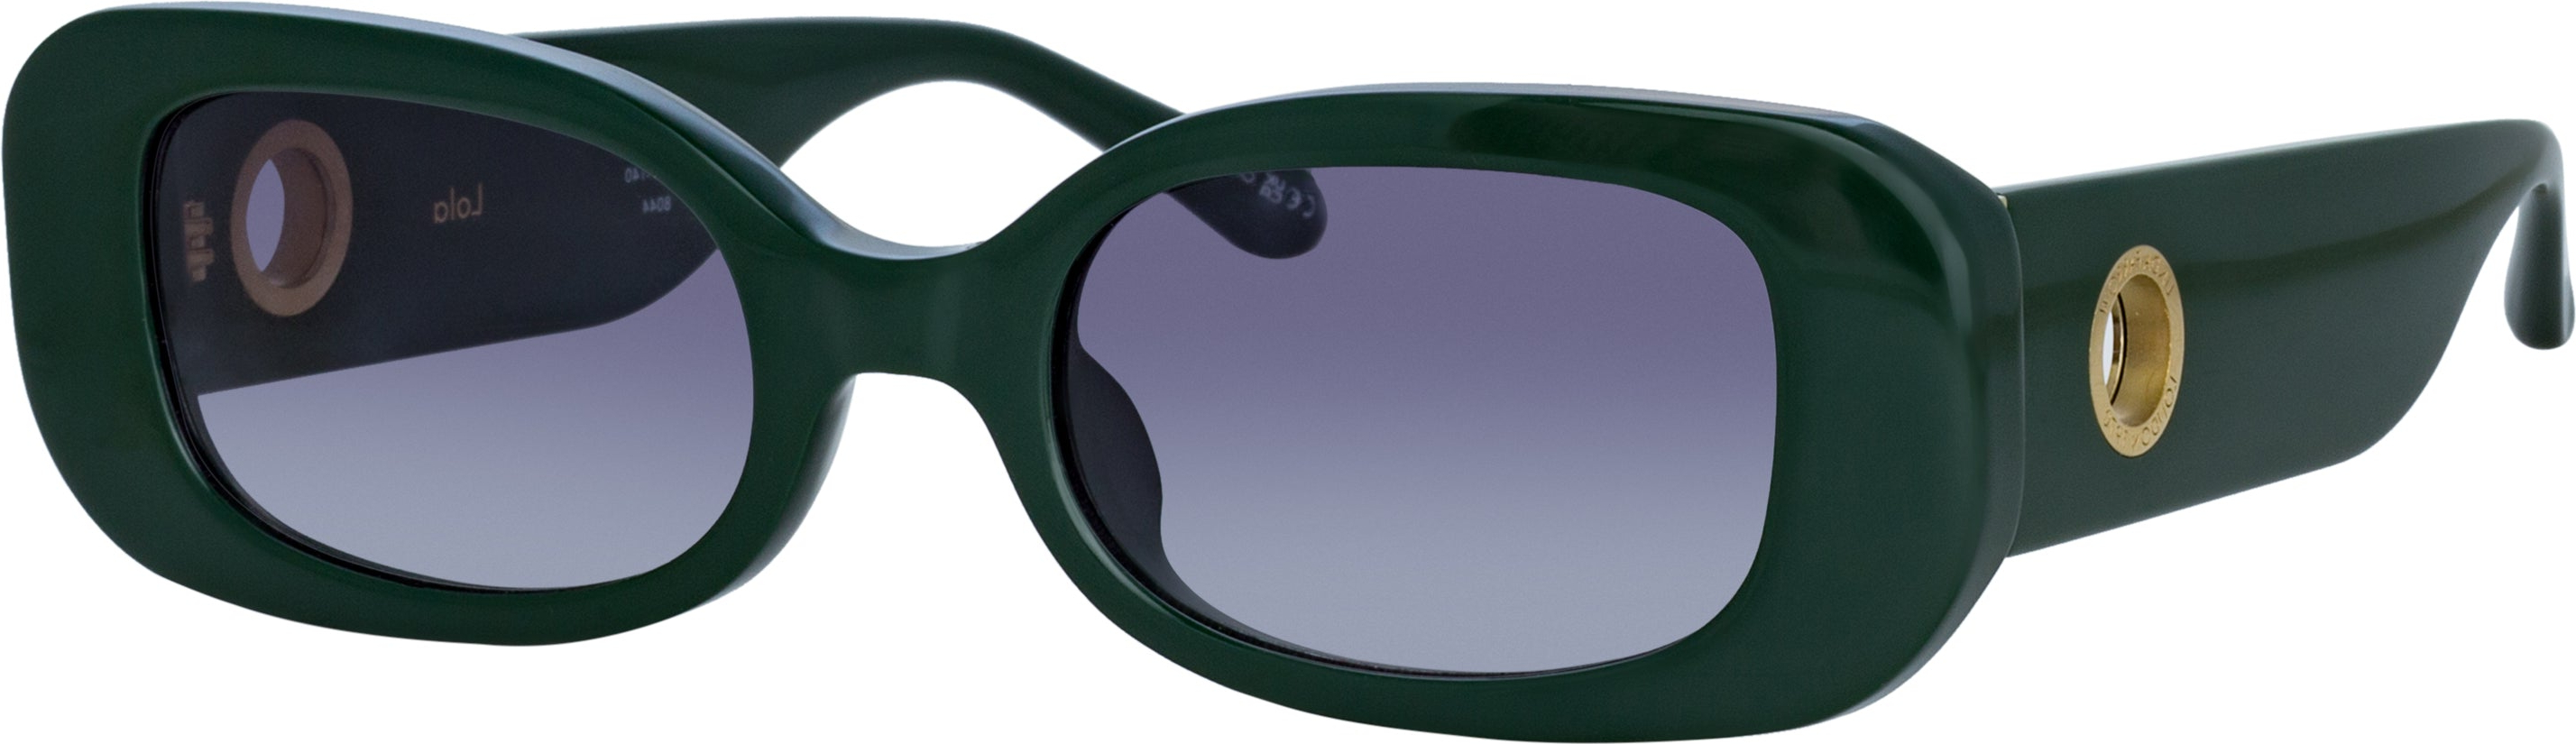 Color_LFL1117C7SUN - Lola Rectangular Sunglasses in Green